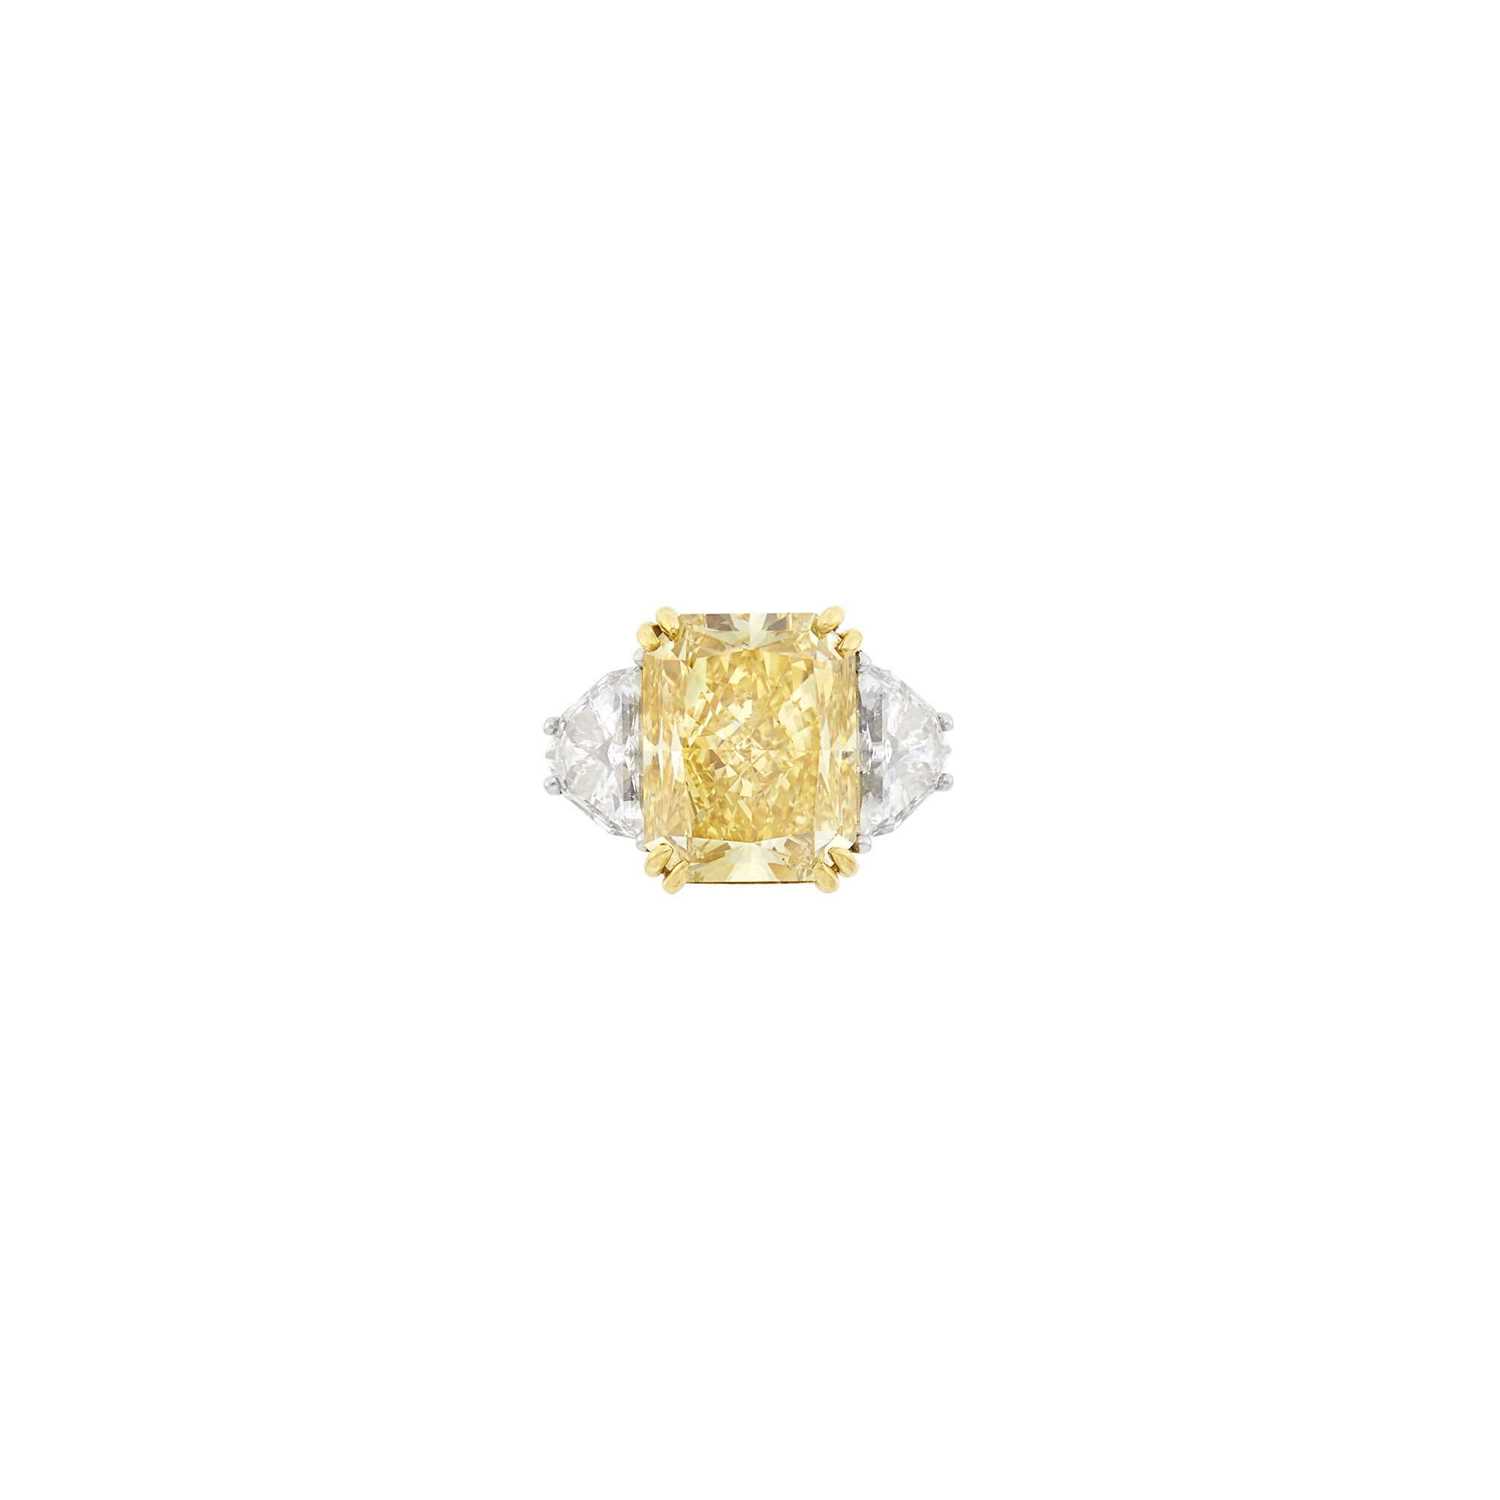 Lot 230 - Platinum, Gold, Fancy Brownish Yellow Diamond and Diamond Ring